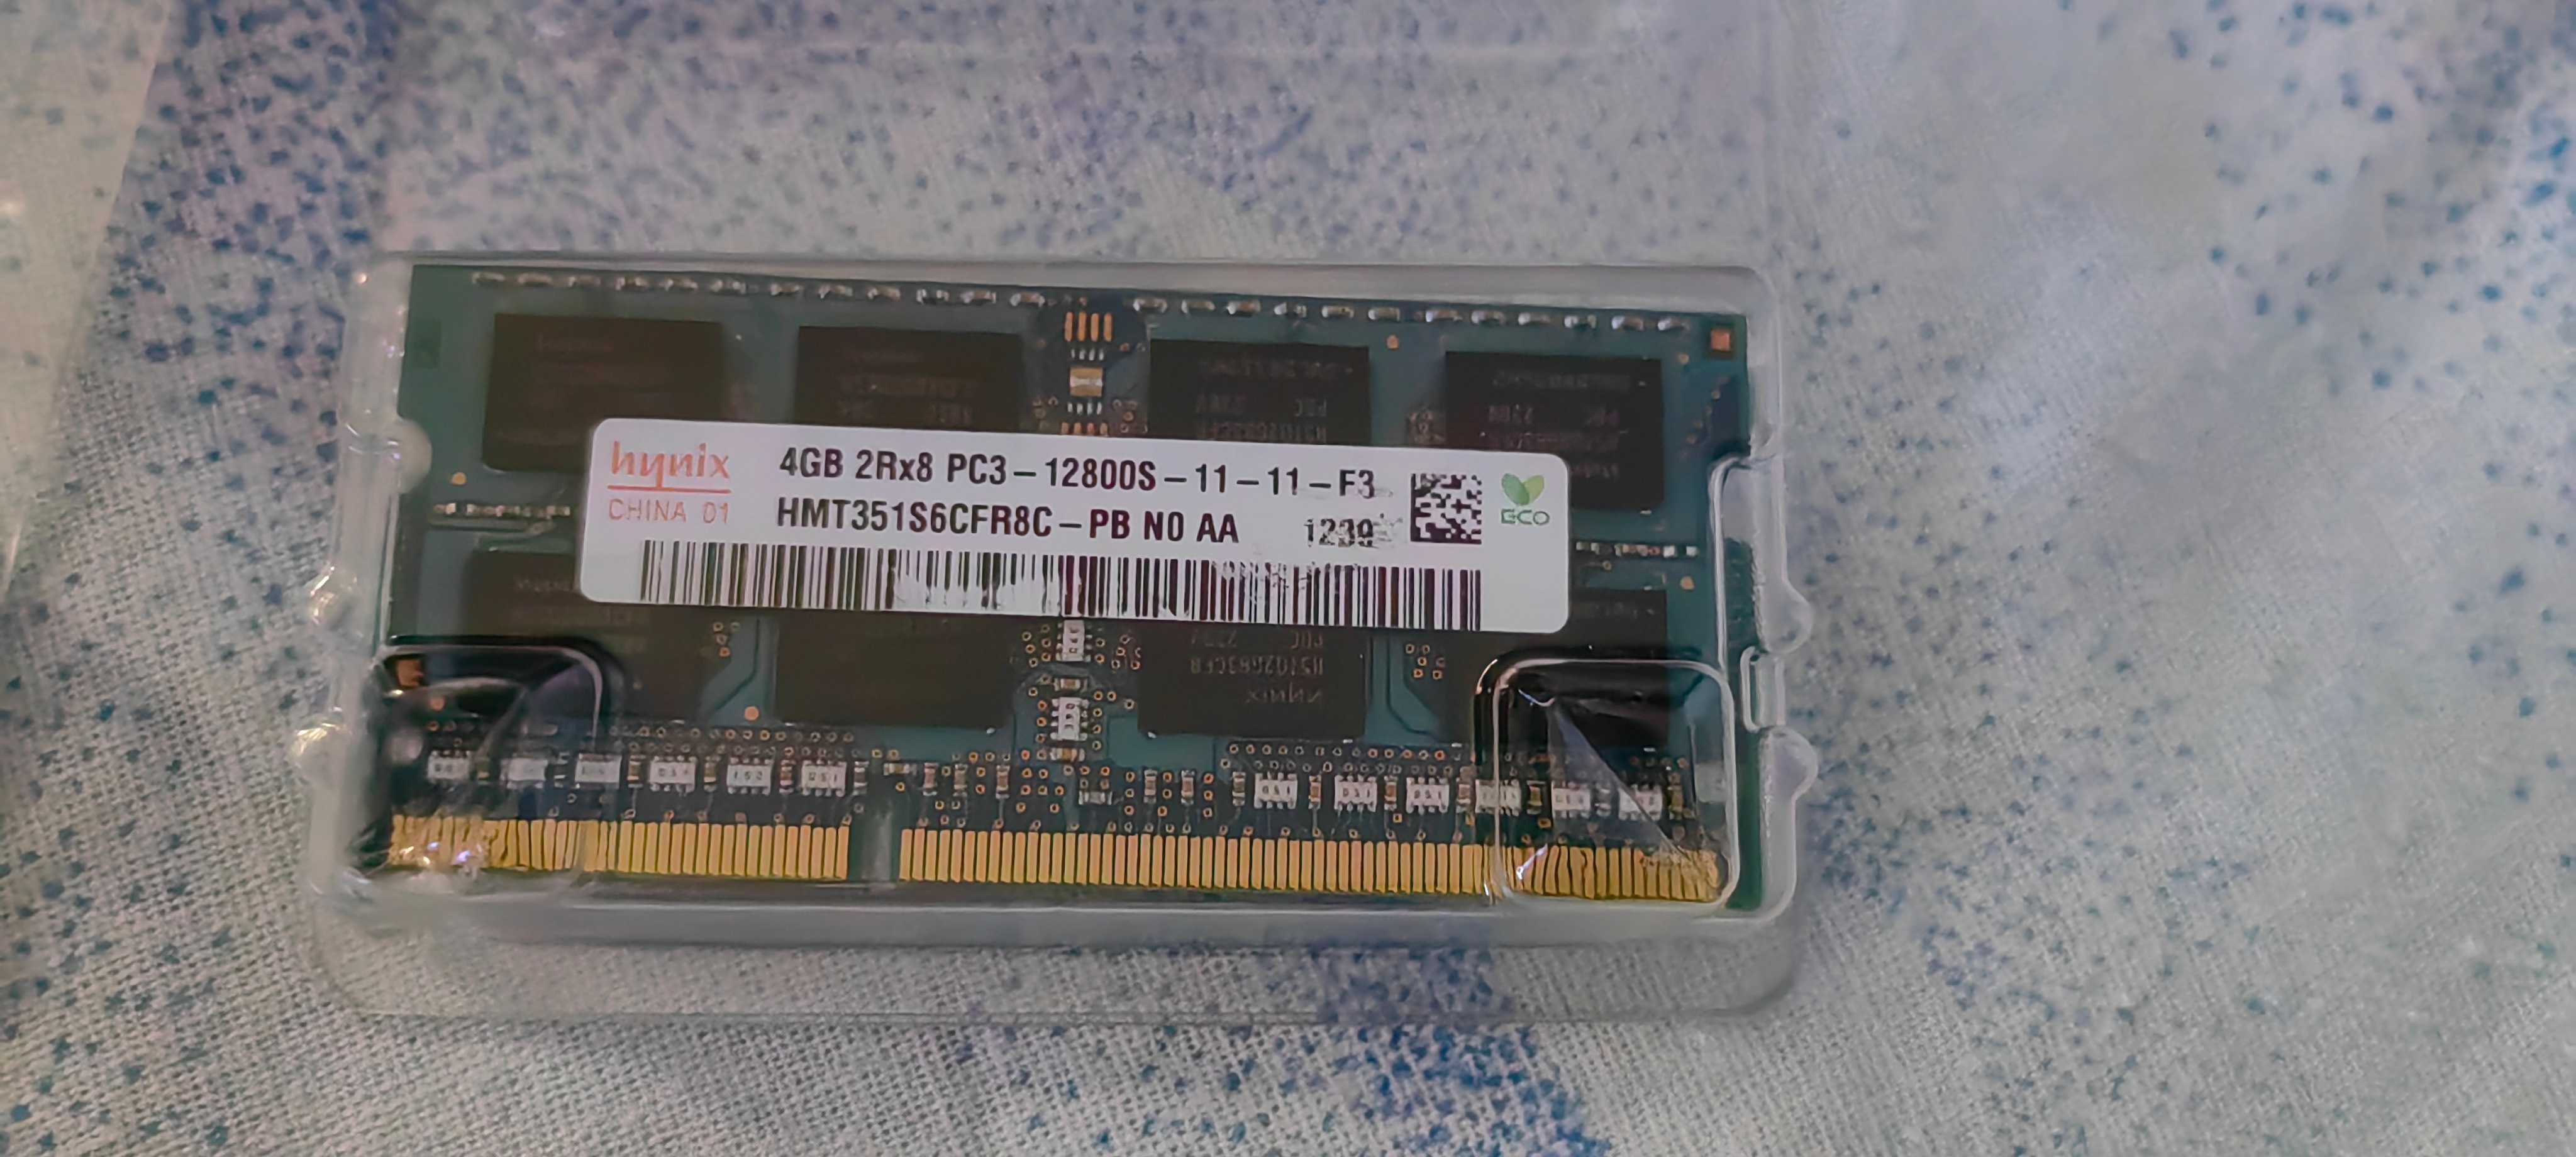 Memorie Laptop Crucial 4GB DDR3 PC3 12800s 8gb